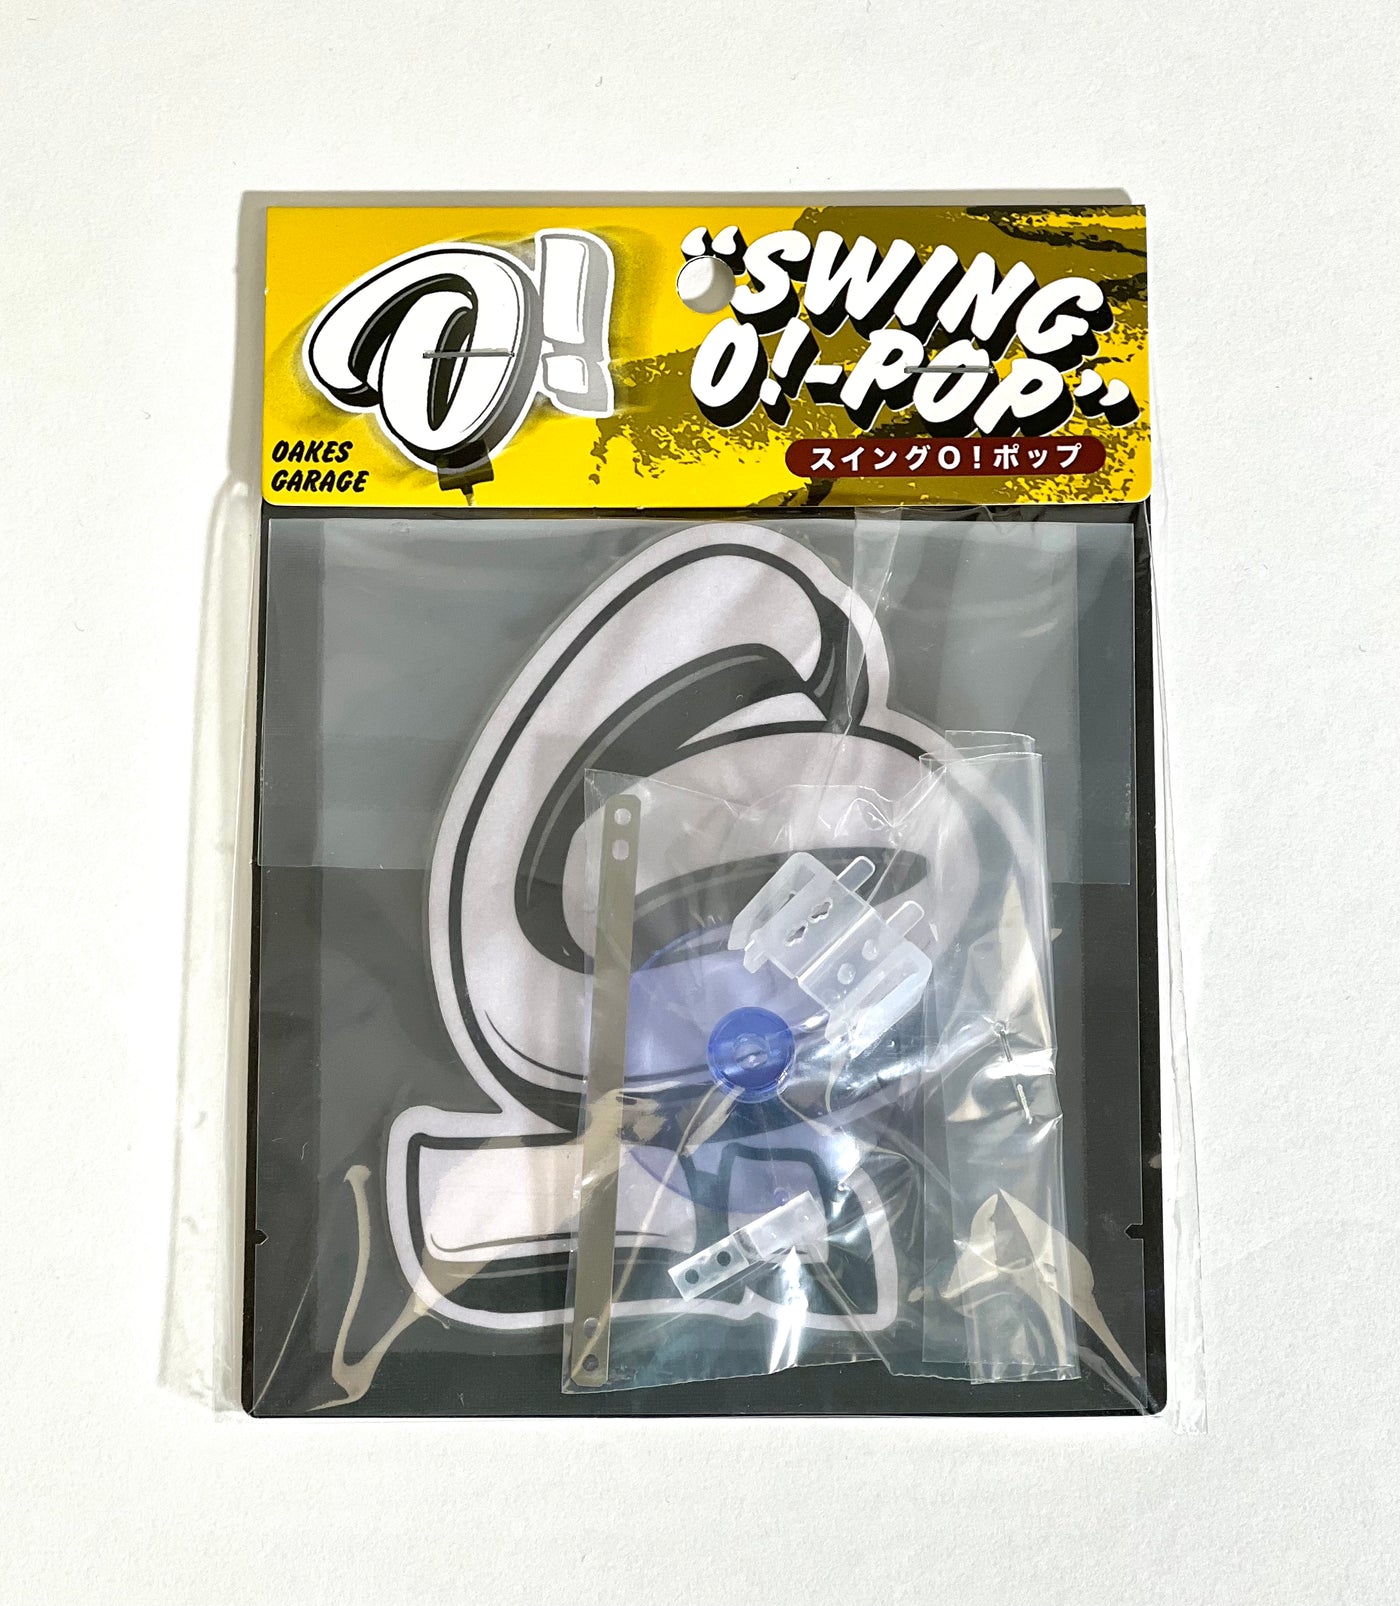 Swing "O!" Pop - Air freshener